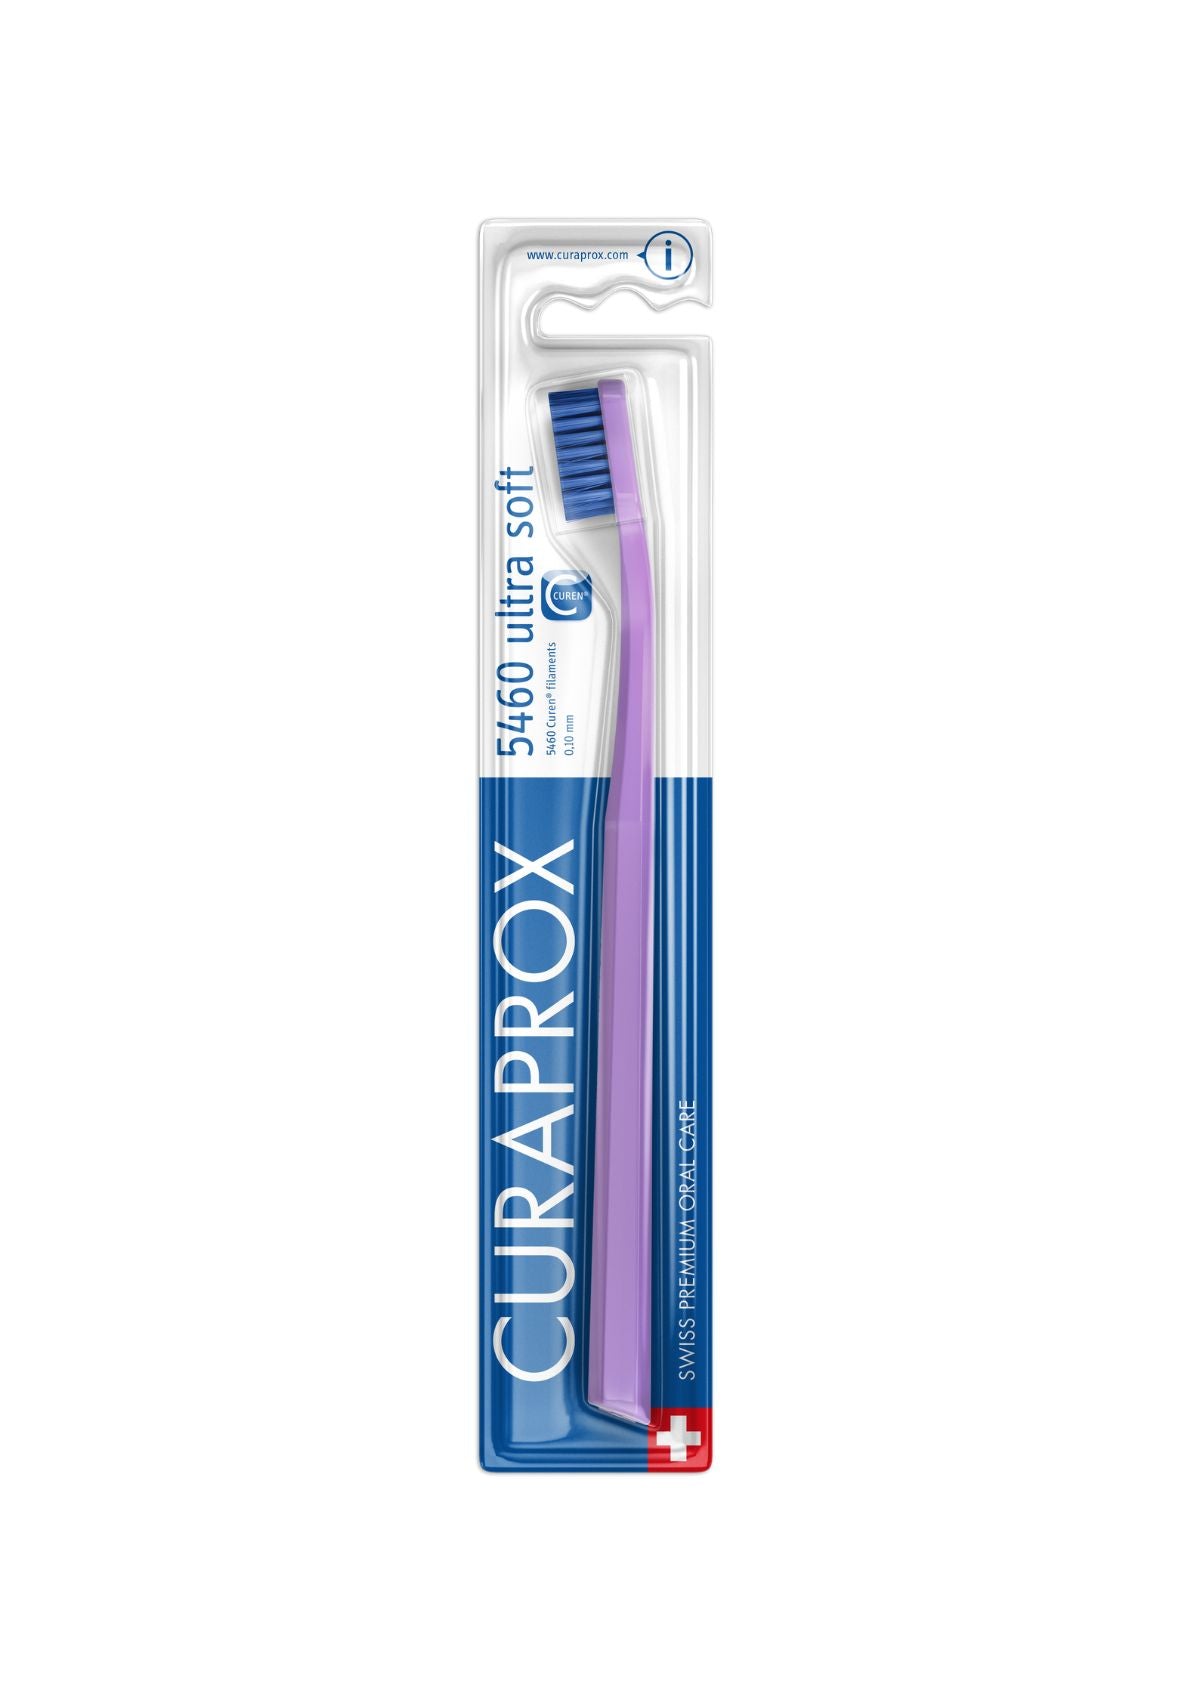 FREE Curapox CS 5460 Toothbrush